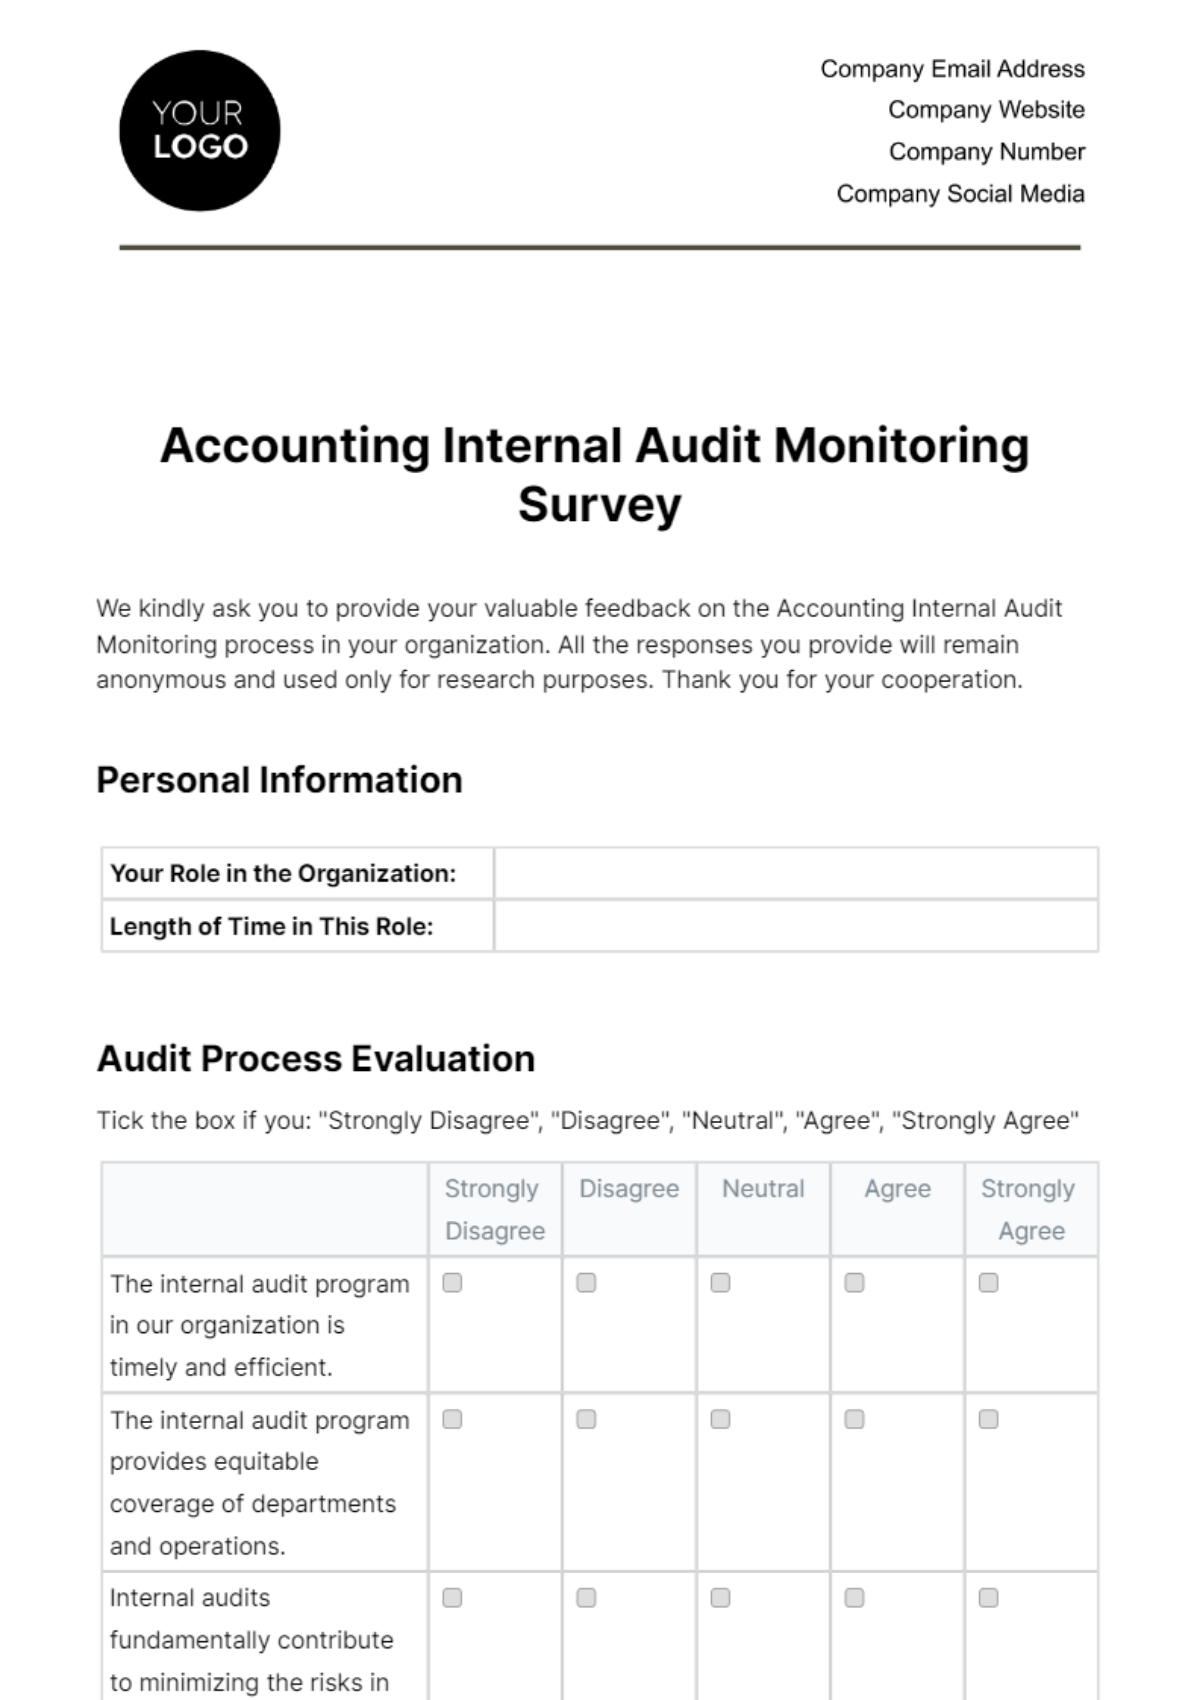 Accounting Internal Audit Monitoring Survey Template